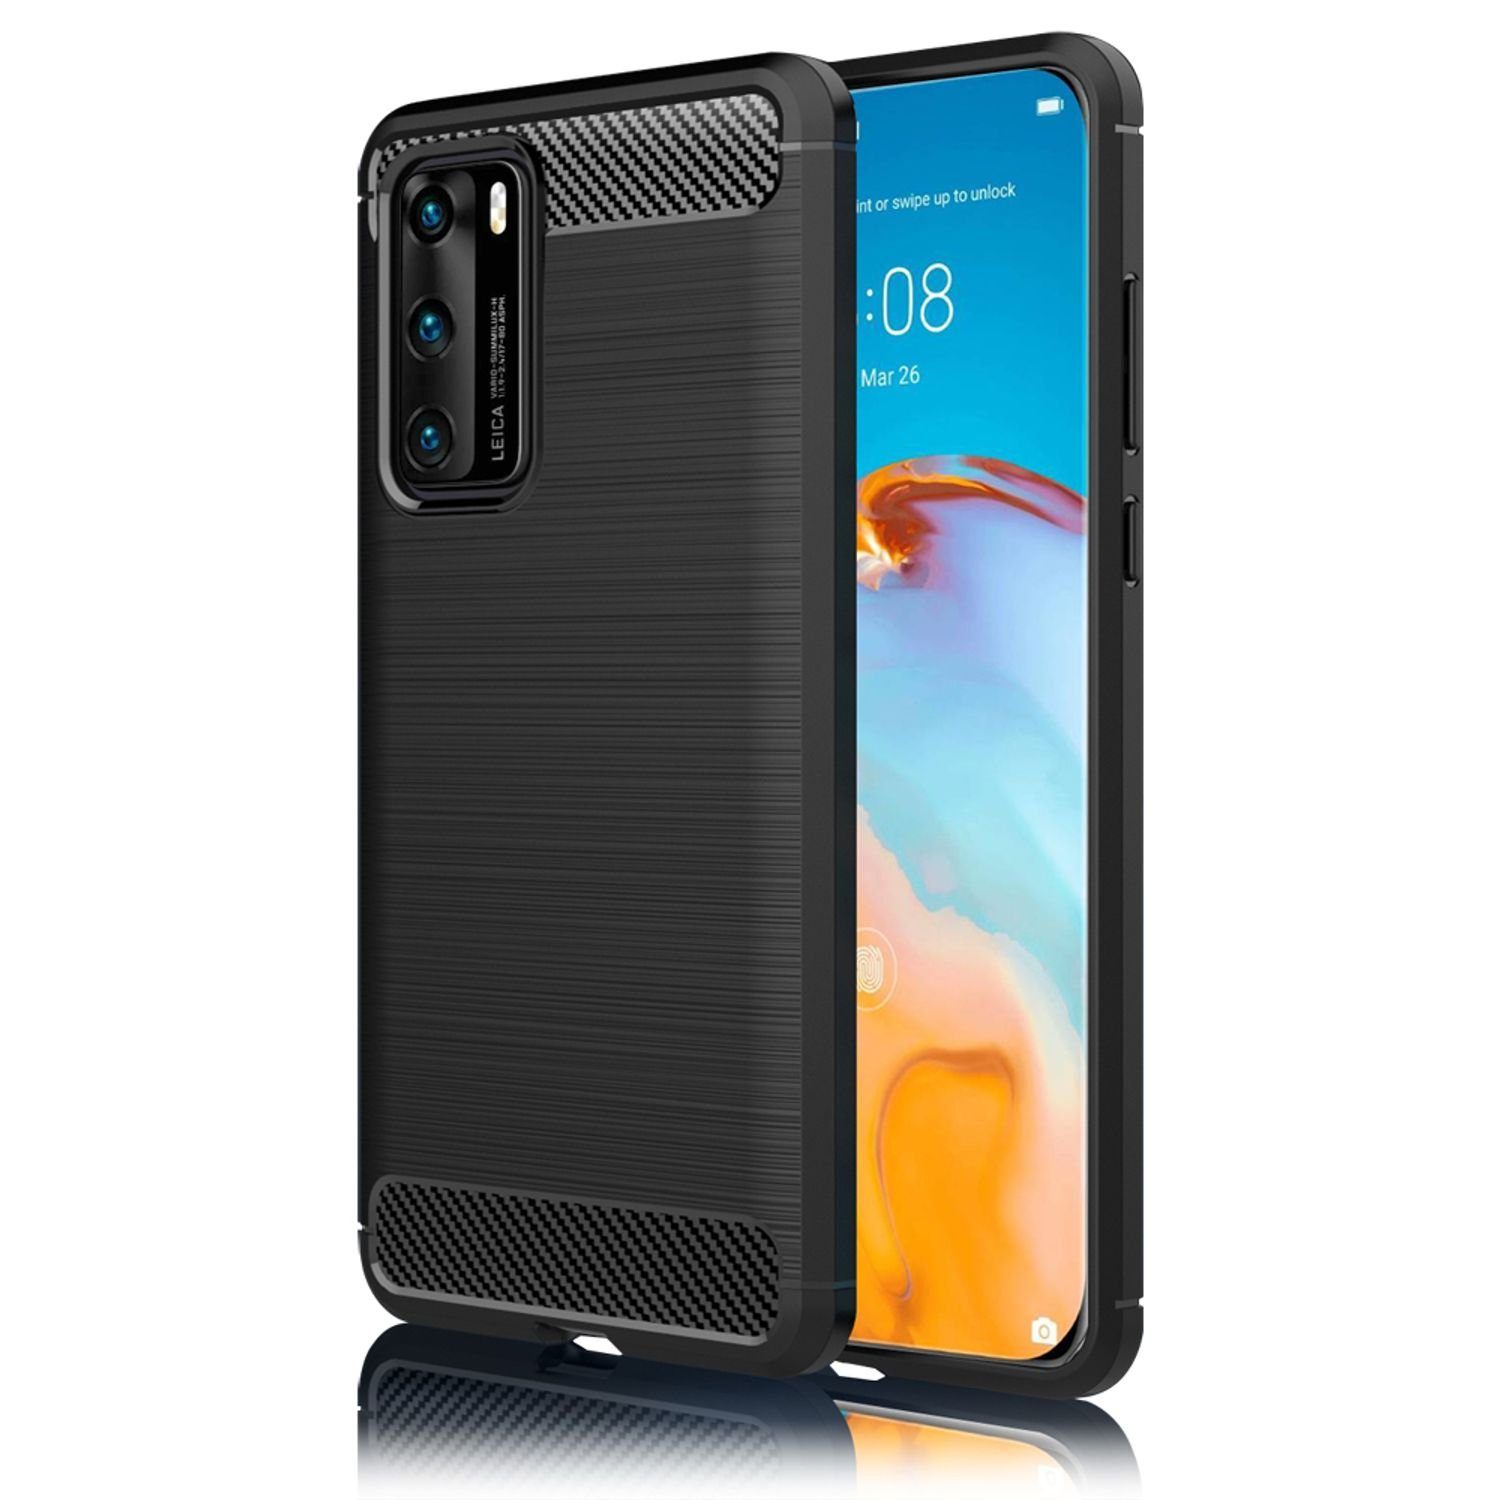 Nalia Smartphone-Hülle Huawei P40, Carbon Look Silikon Hülle / Matt Schwarz / Rutschfest / Karbon Optik